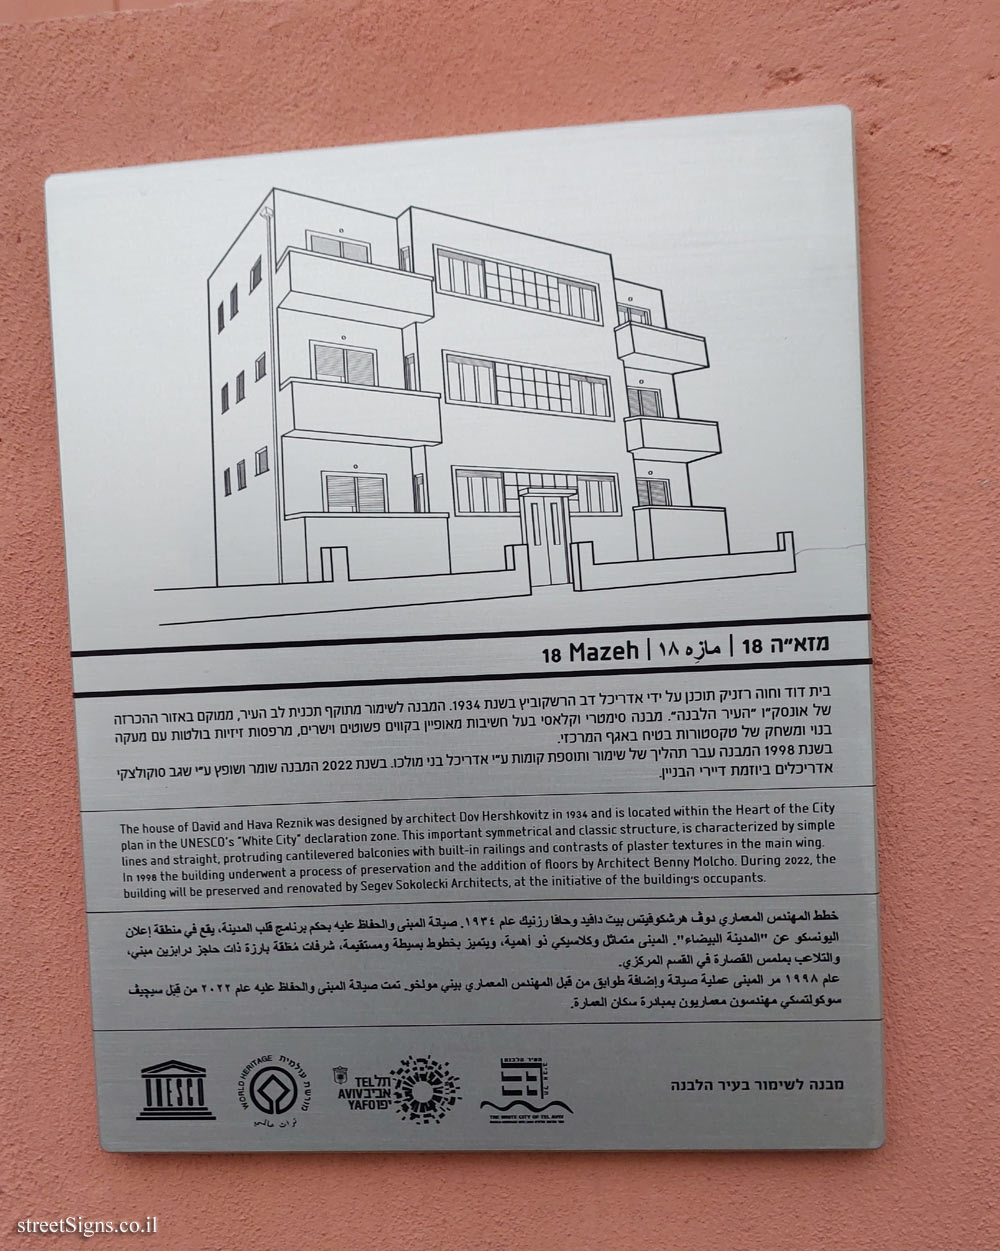 Tel Aviv - buildings for conservation - 18 Mazeh